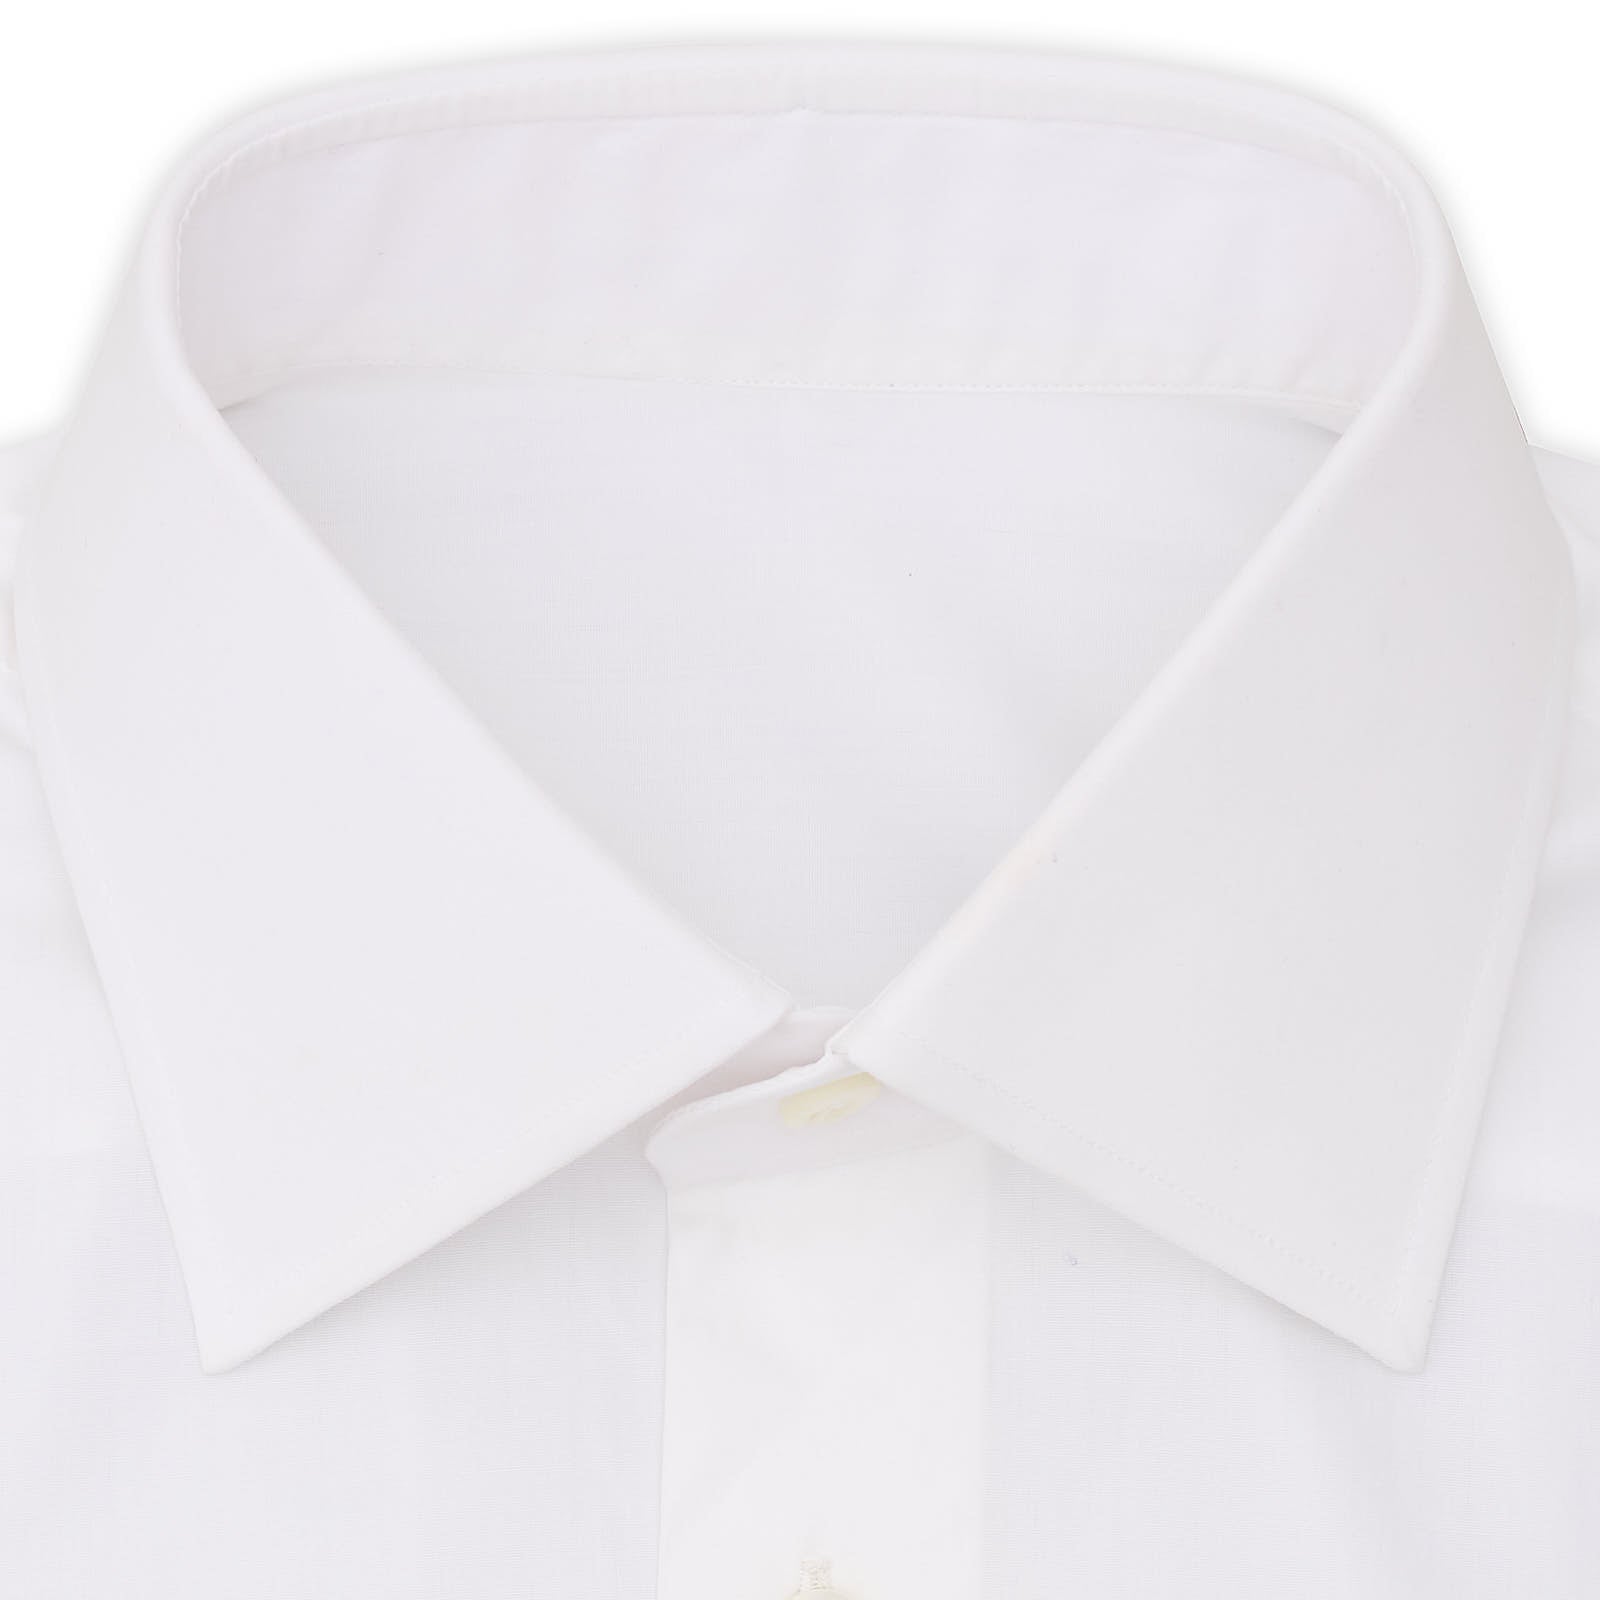 BESPOKE ATHENS Handmade White Cotton Poplin Dress Shirt EU 38 NEW US 15